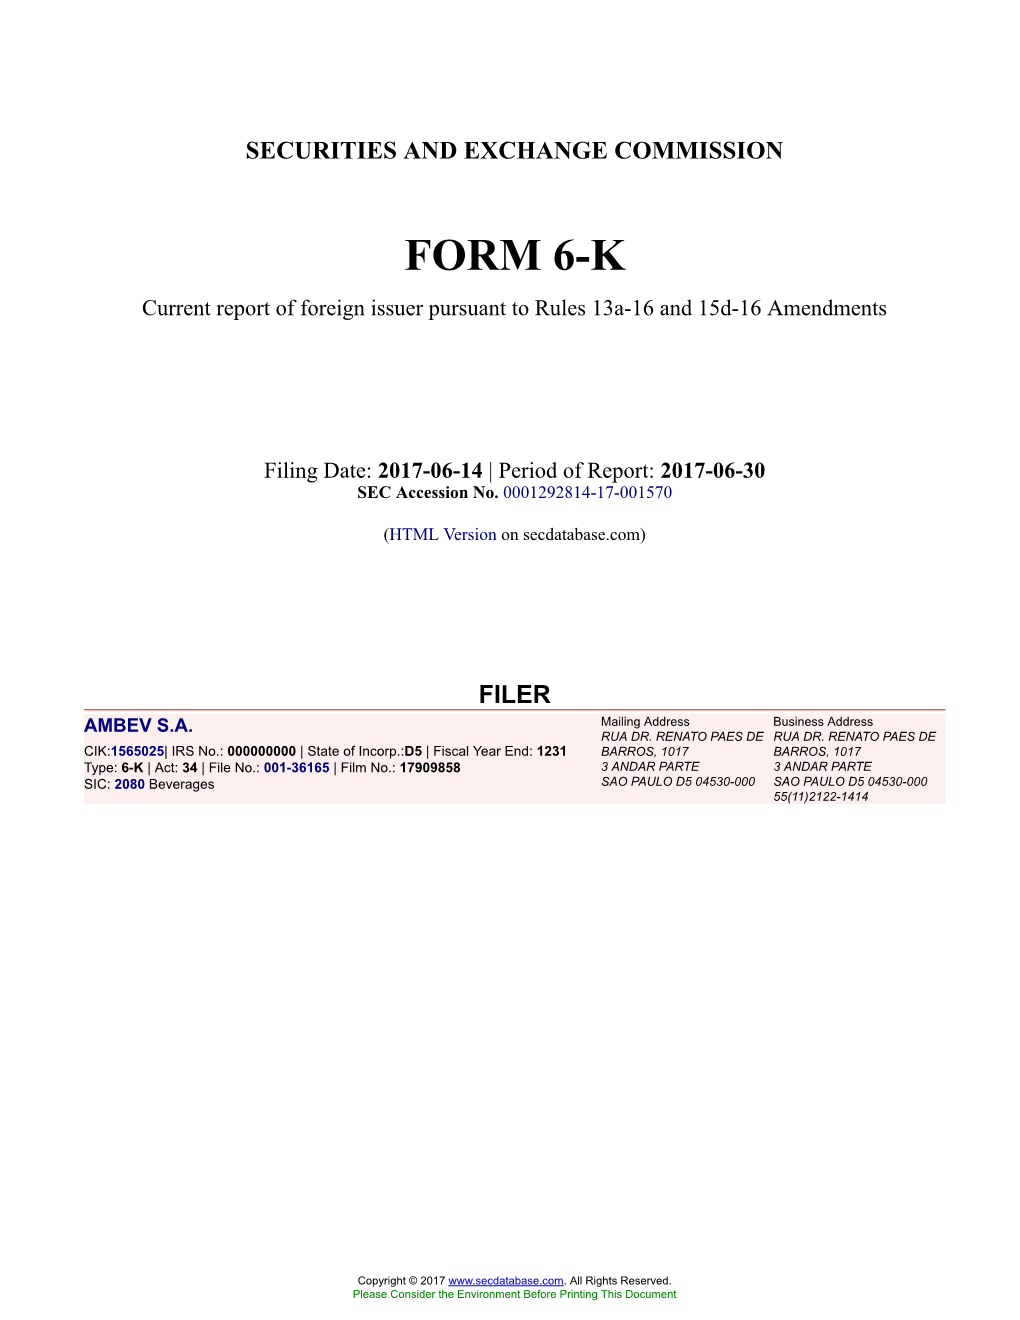 AMBEV S.A. Form 6-K Current Report Filed 2017-06-14